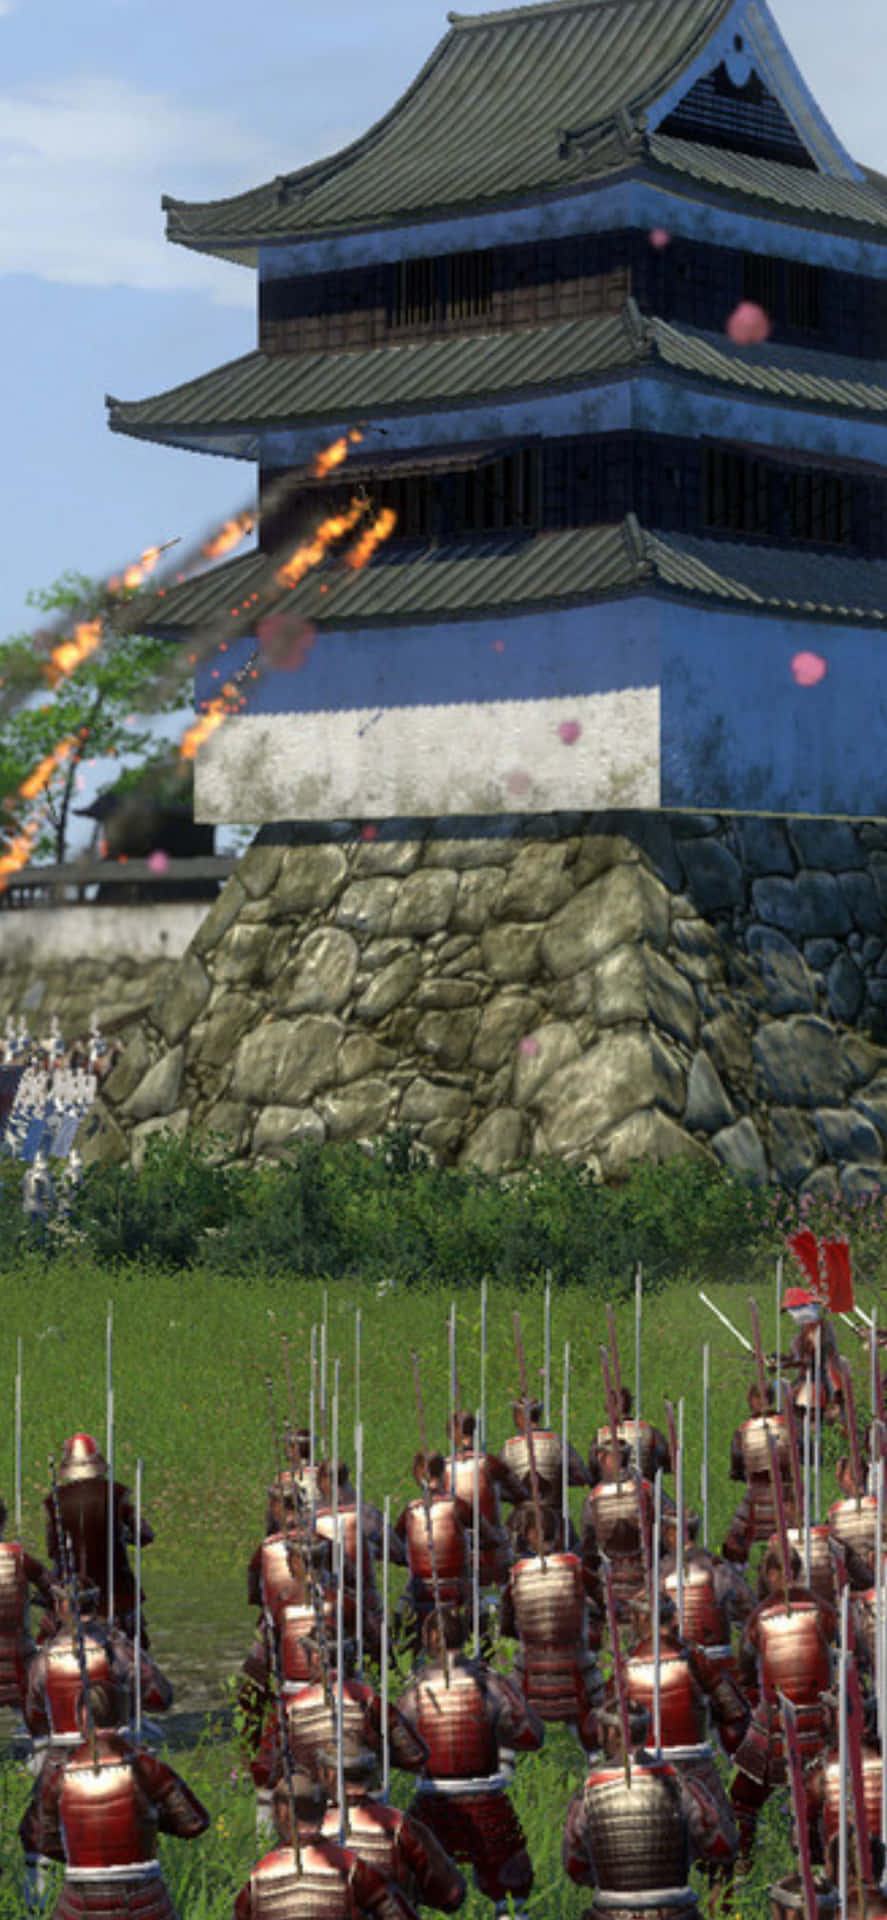 Iphonex Total War Shogun 2 Bakgrund